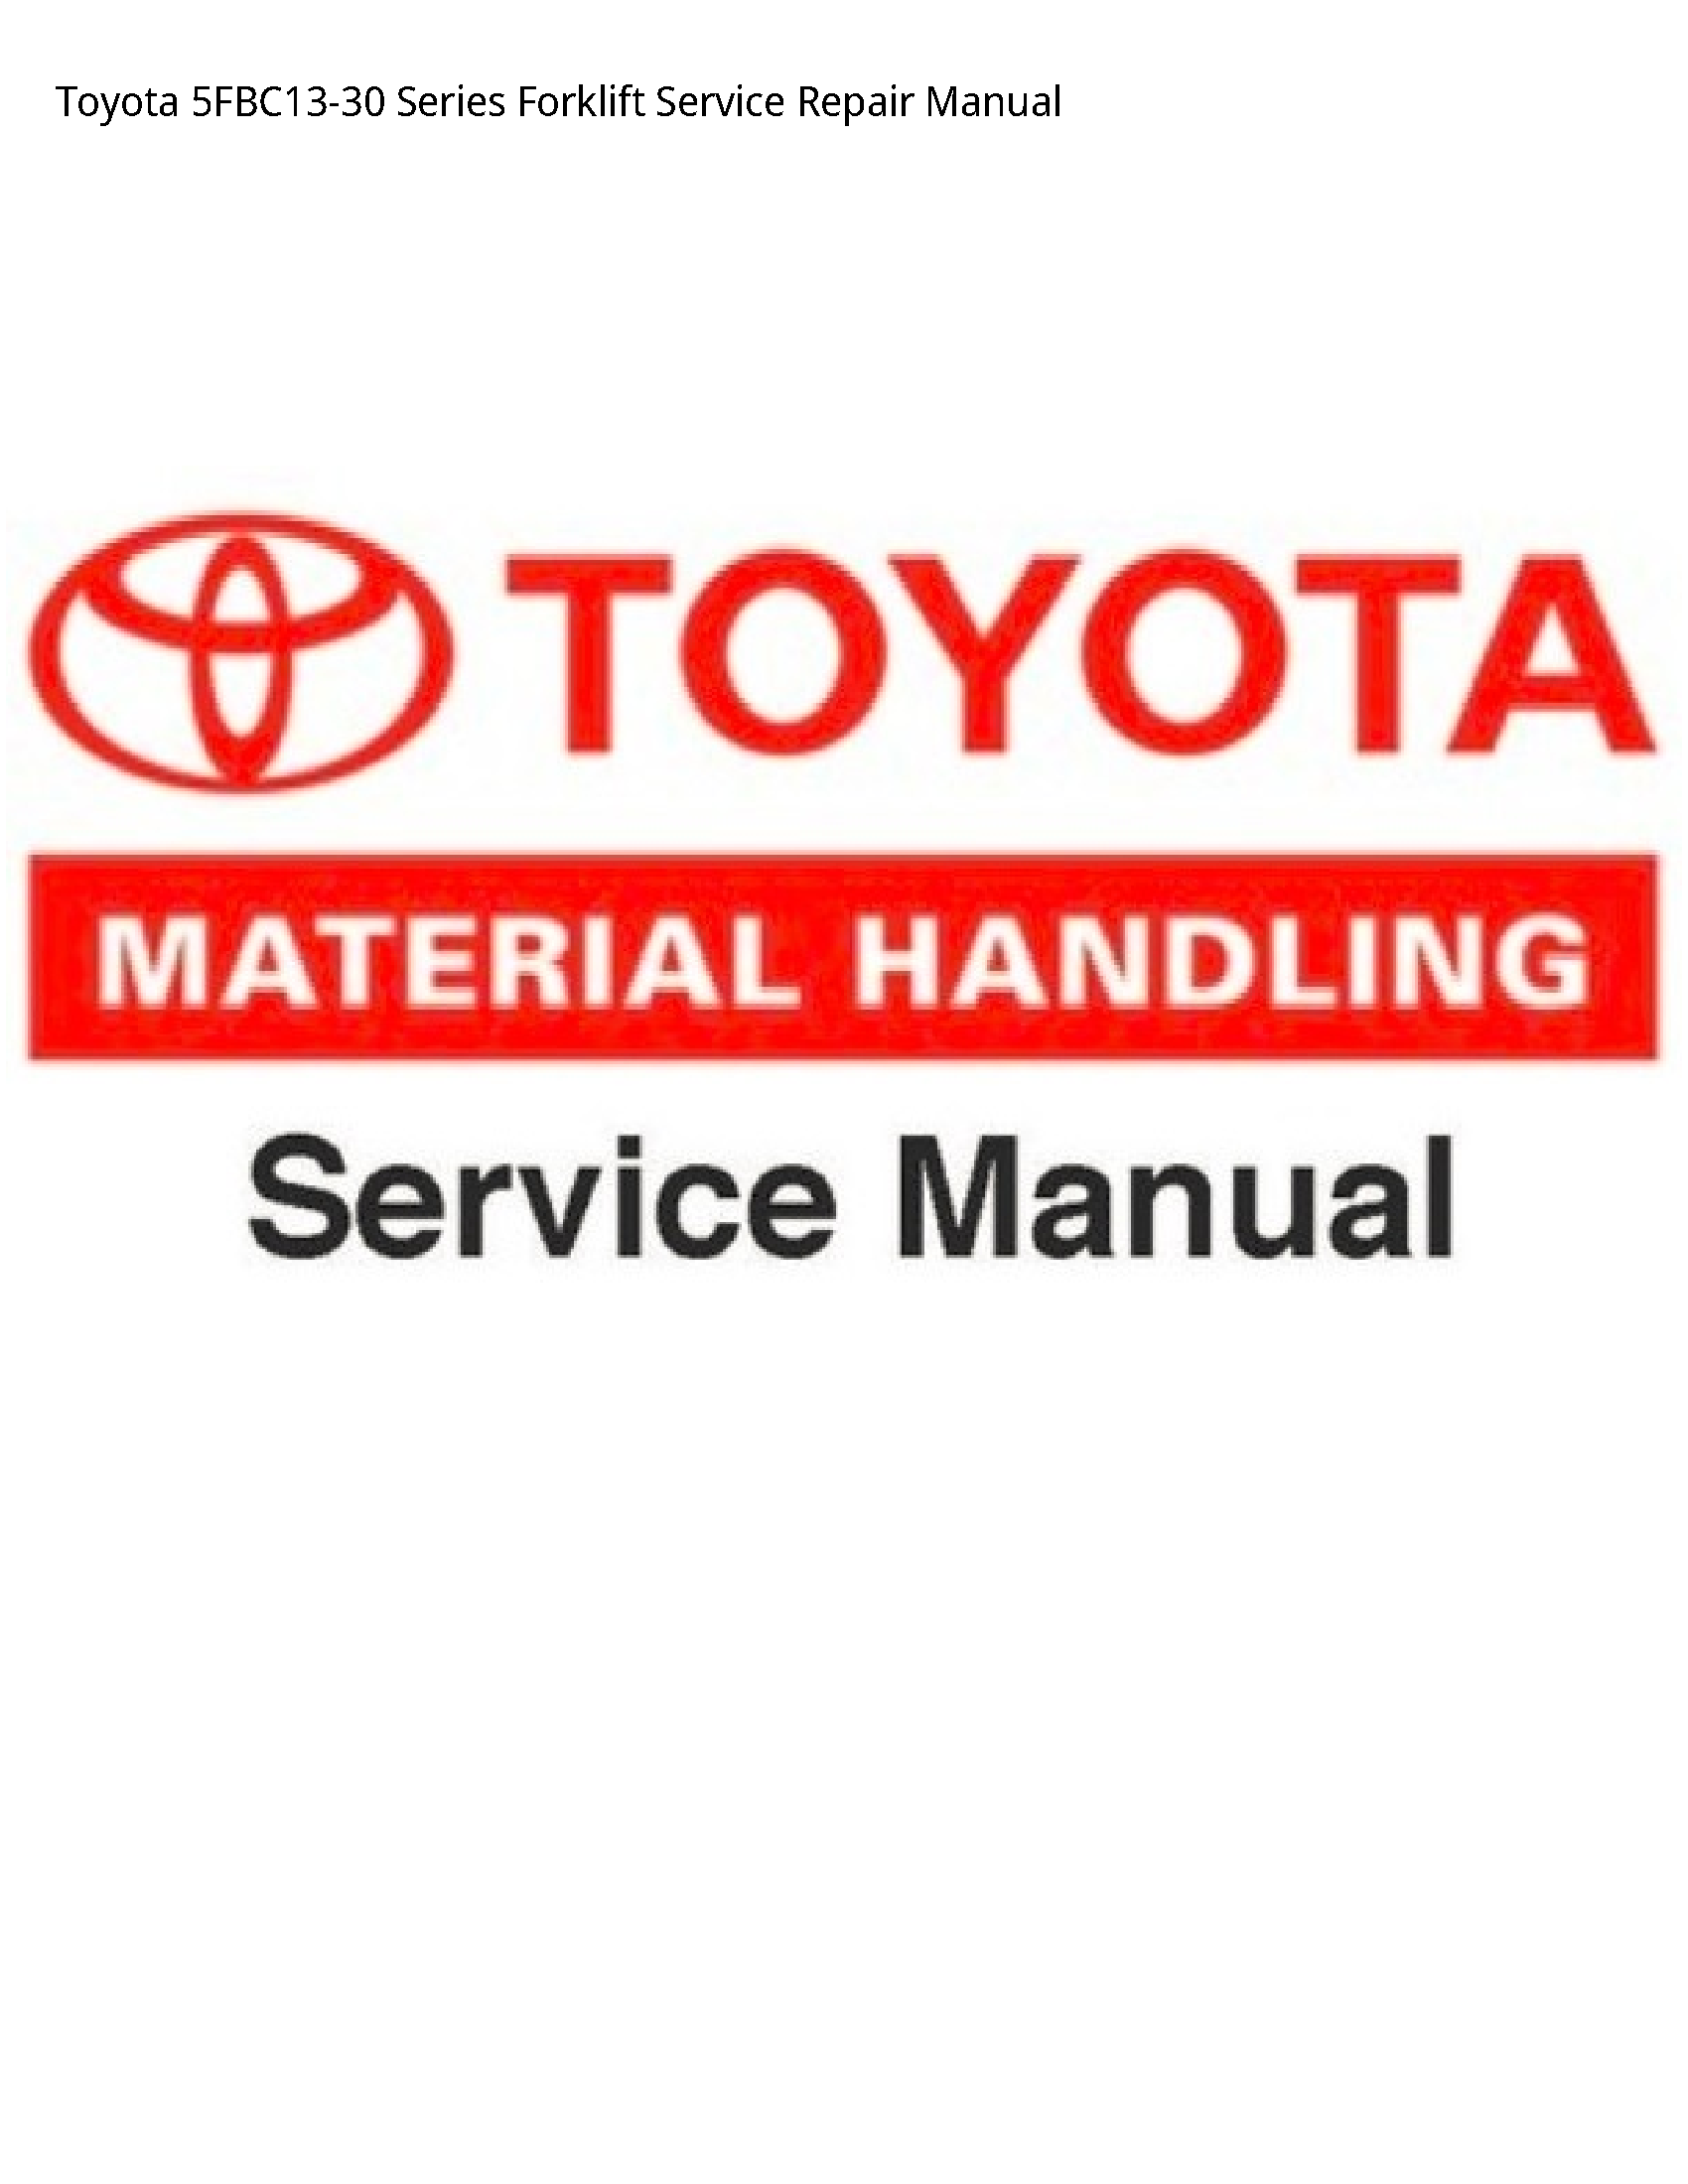 Toyota 5FBC13-30 Series Forklift manual